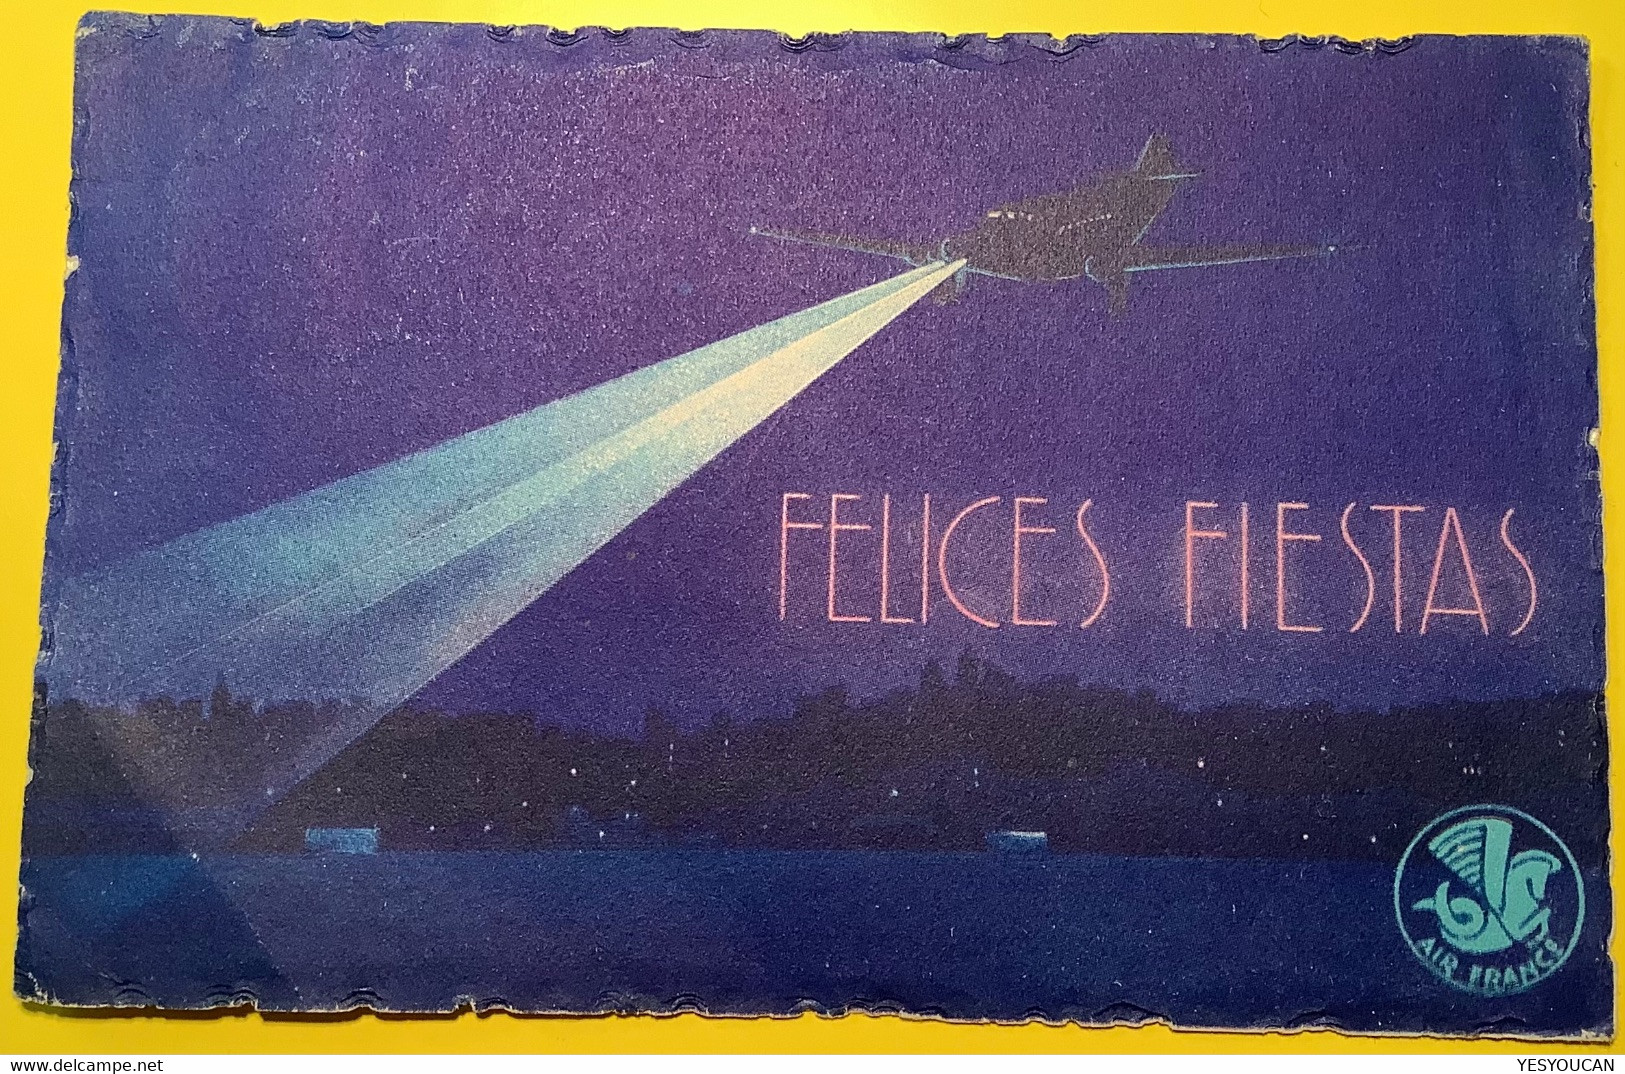 RARE 1935LIGNE MERMOZ AIR FRANCE TARJETA AEROPOSTAL FELICES FIESTAS NAVIDAD(Argentina Air Mail Cover Noël Cpa Argentine - Covers & Documents